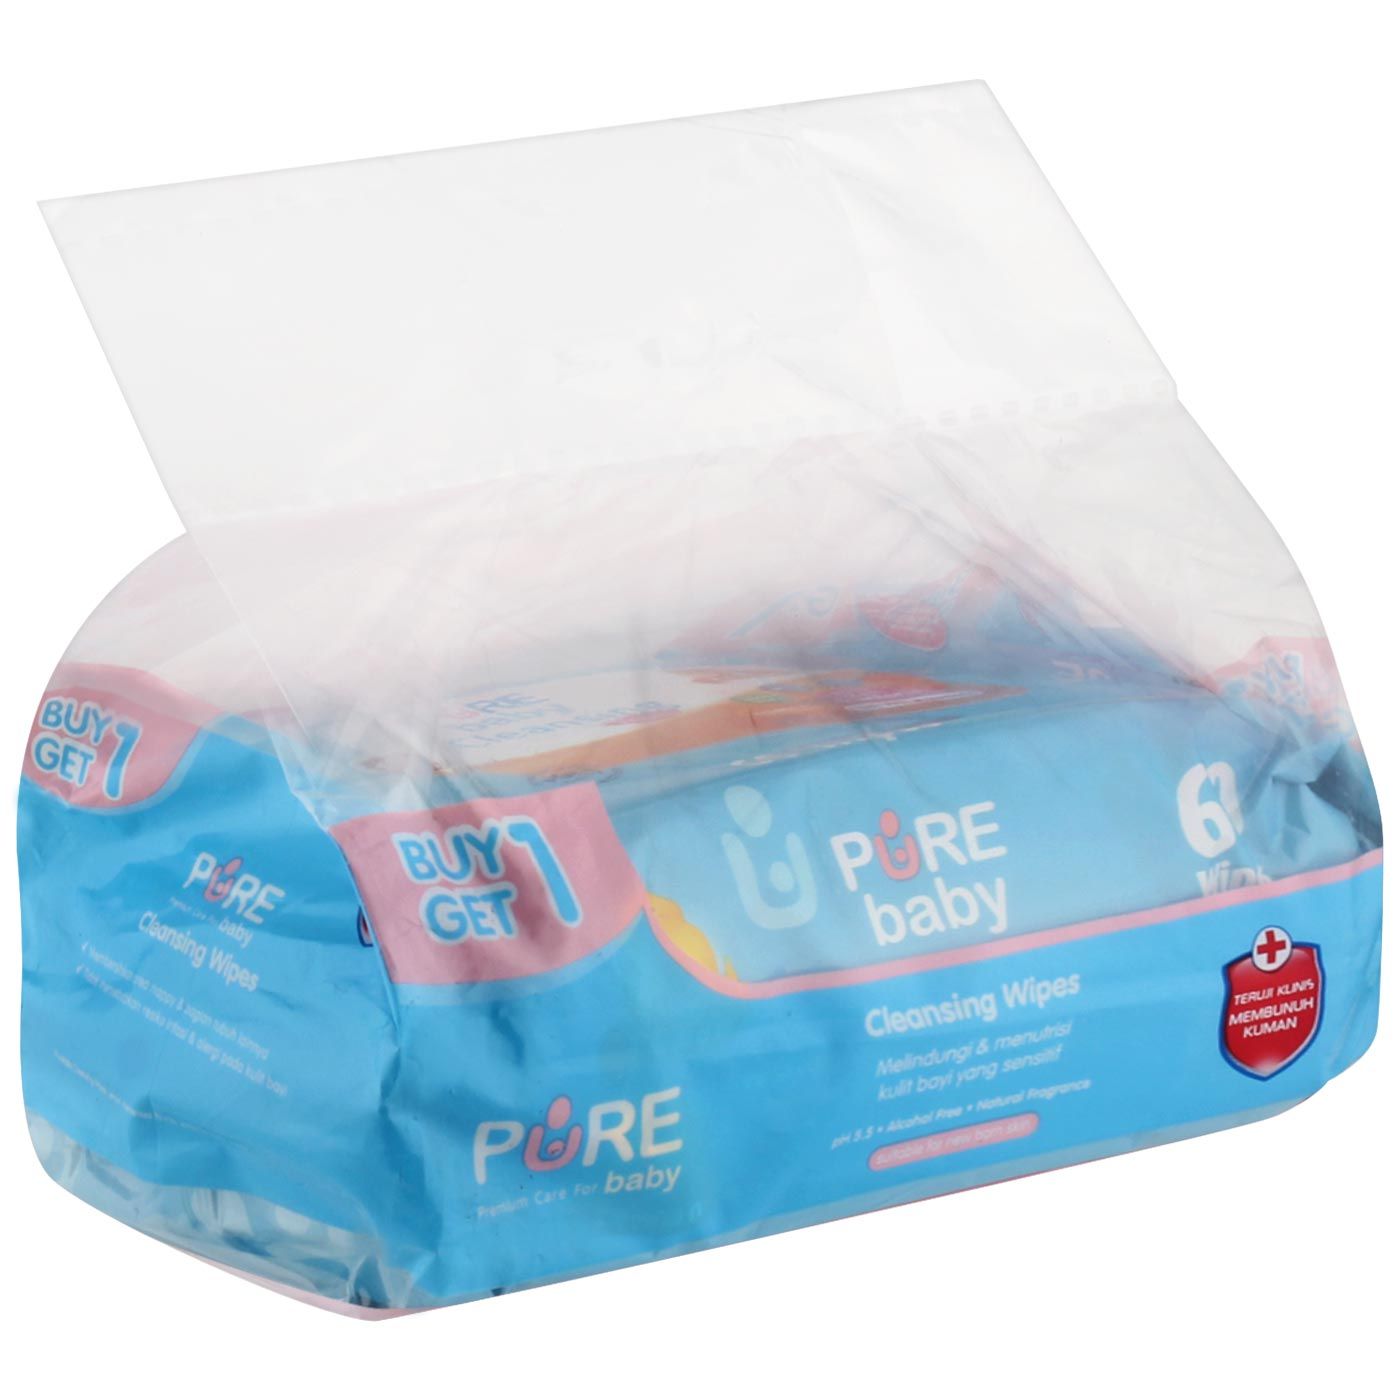 Pure Baby Cleansing Wipes Buy1Get1 Lemon 60's - 2